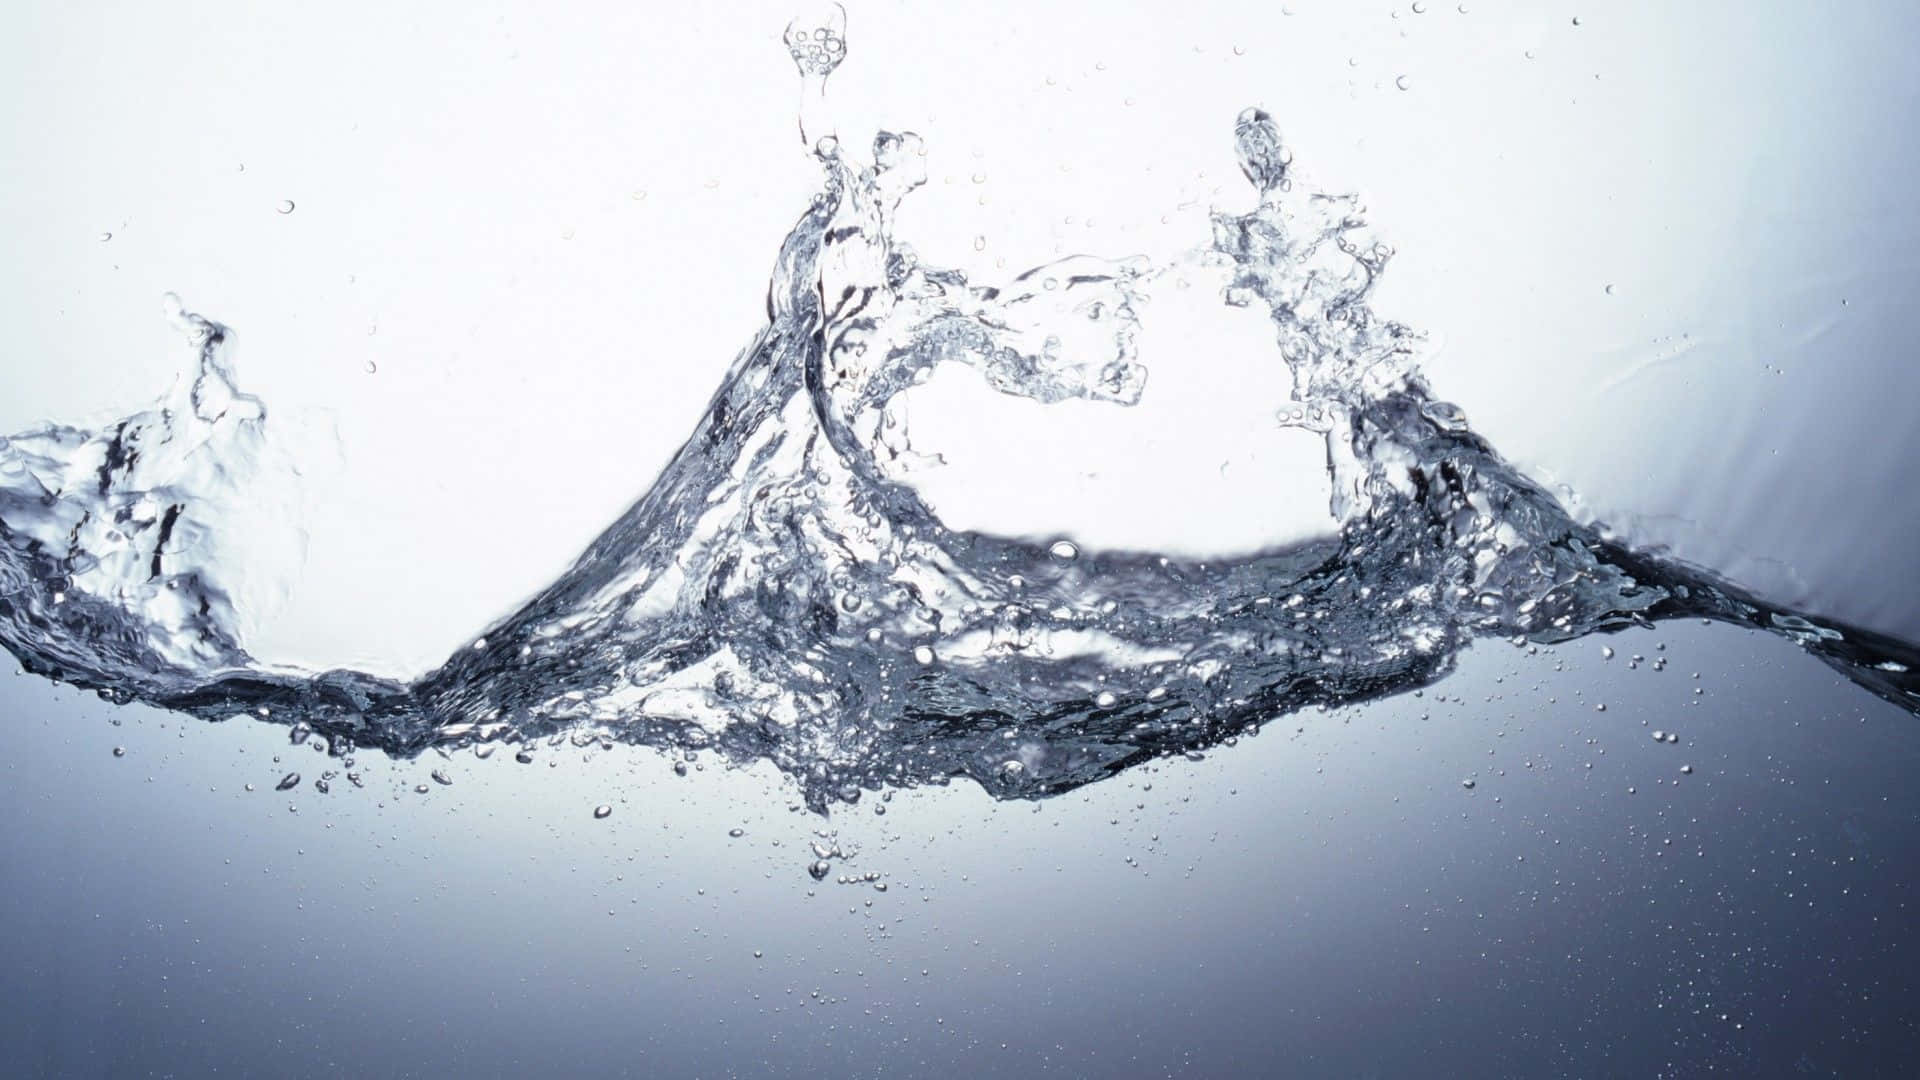 Dynamic Water Splash Photography Wallpaper